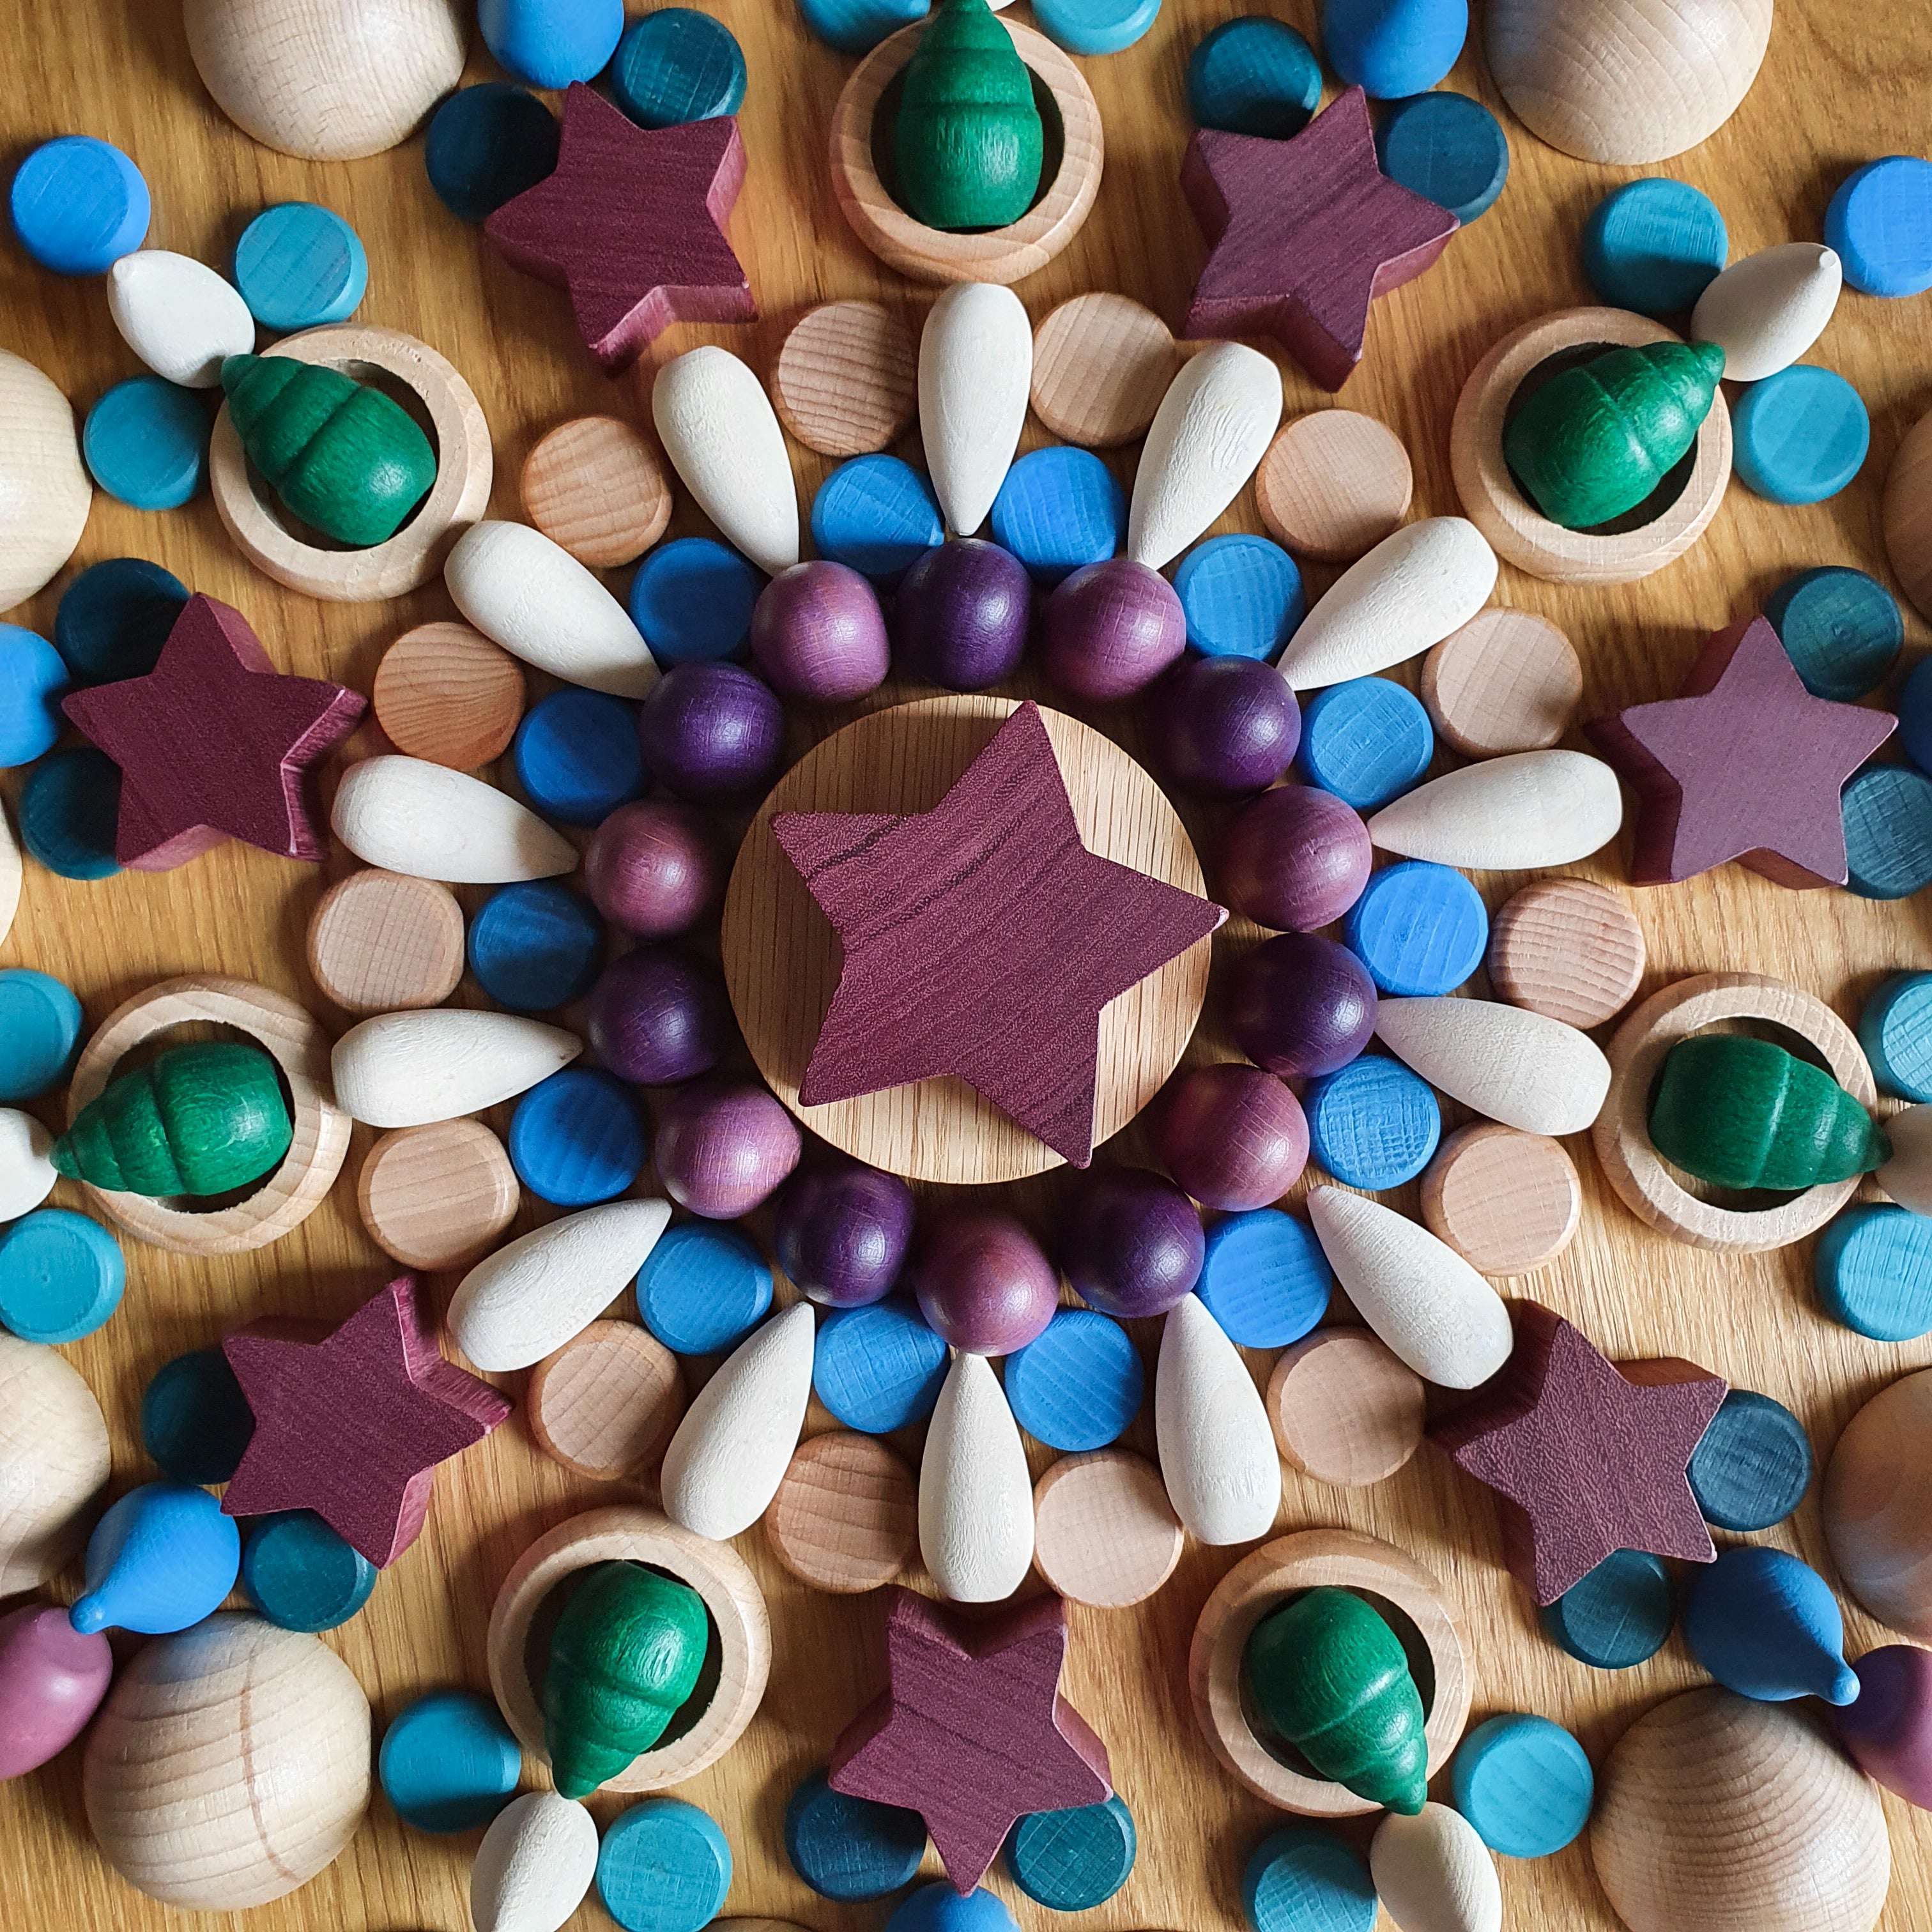 Wooden purpleheart star mandala using smaller wooden purpleheart stars and other small wooden toys.